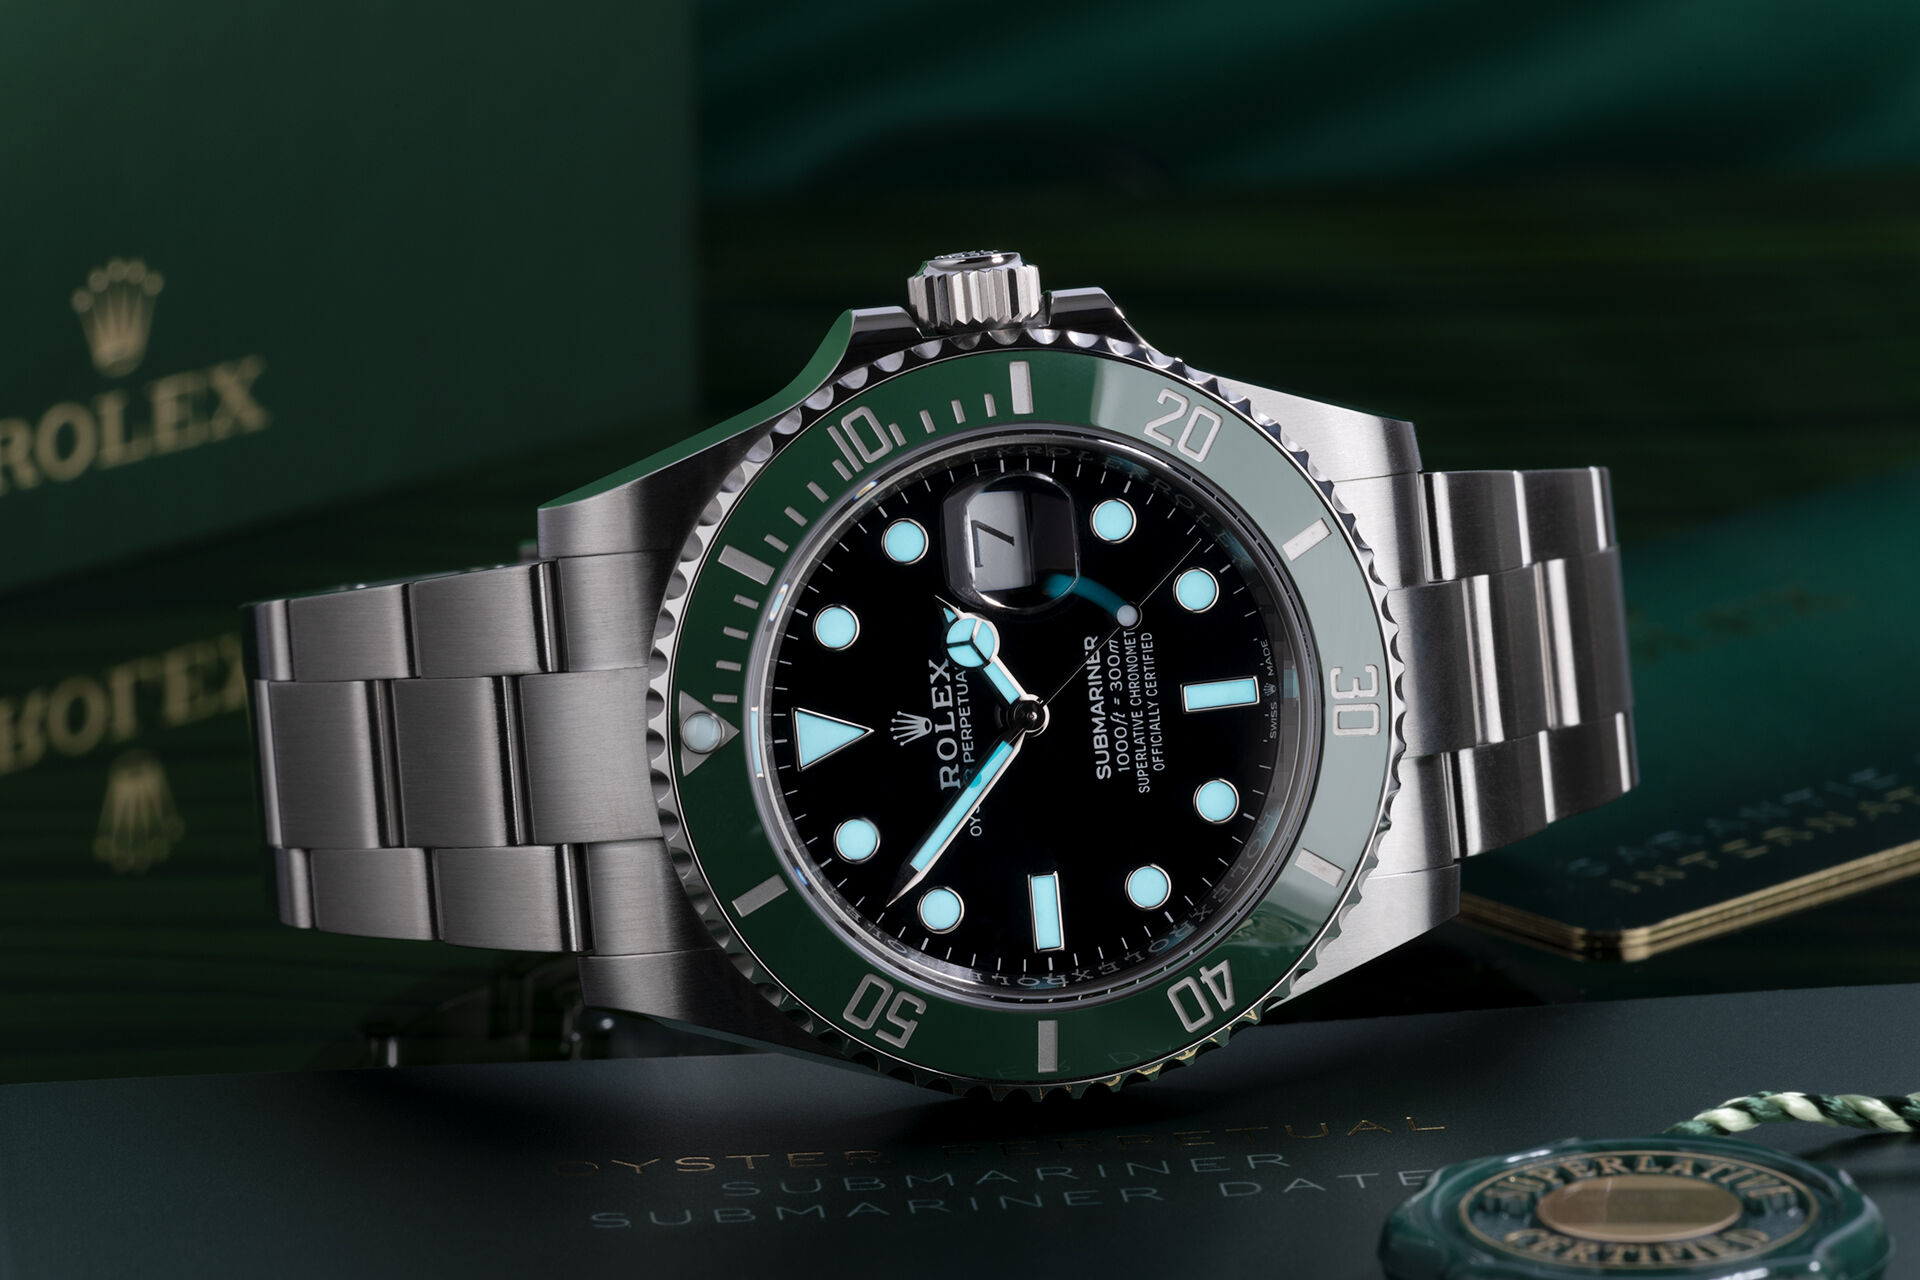 ref 126610LV | Brand New - Latest Release | Rolex Submariner Date